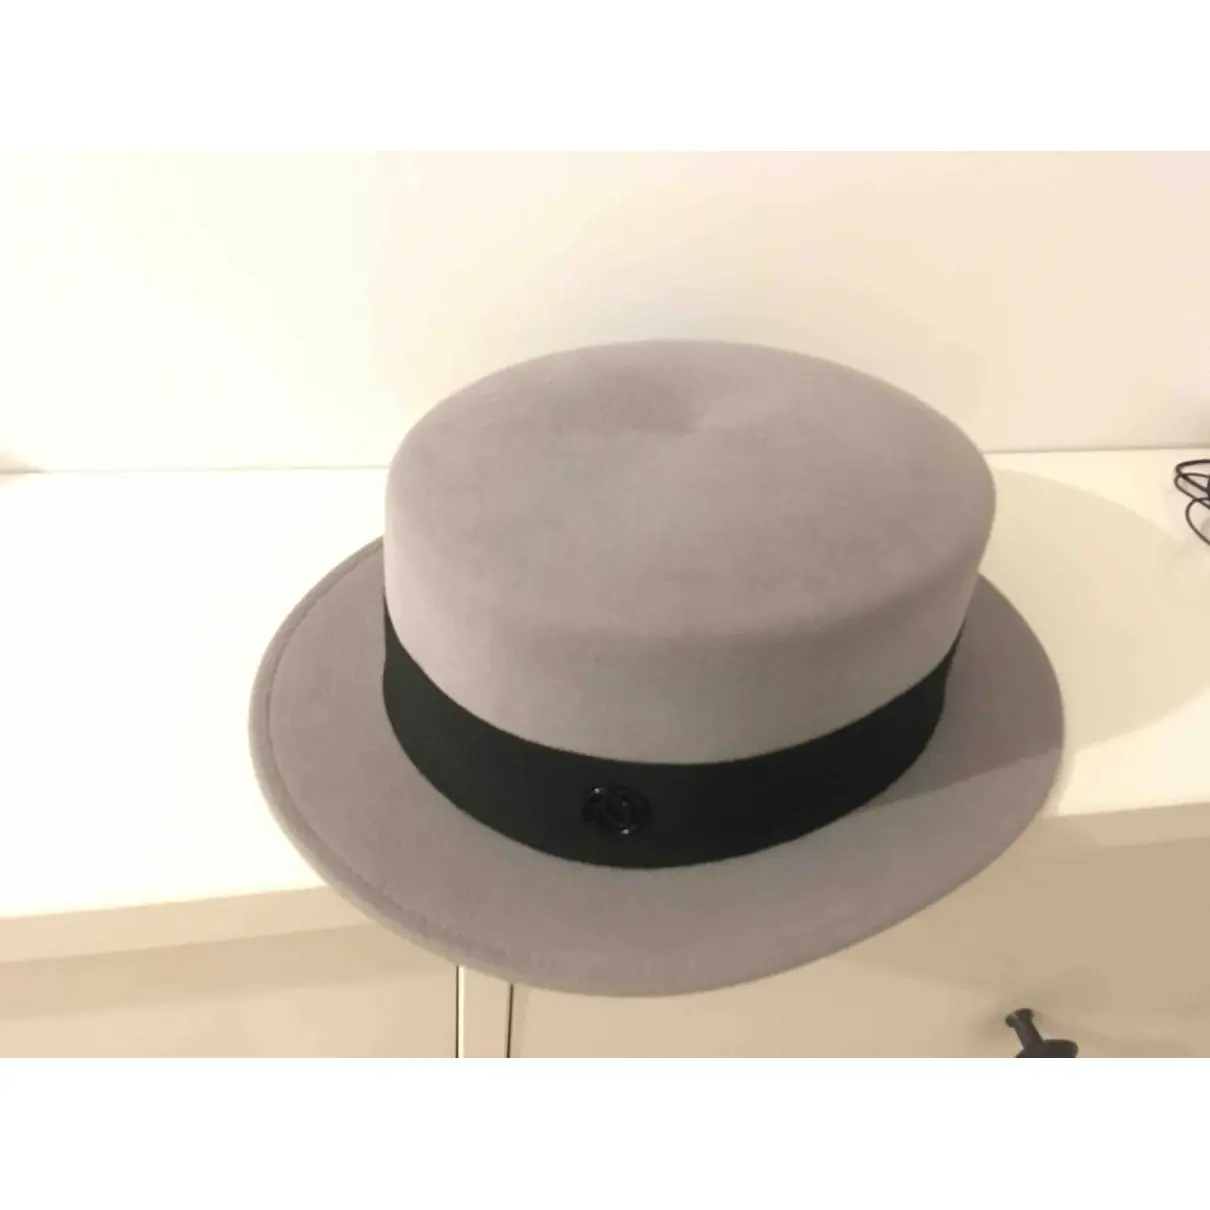 Maison Michel Wool hat for sale